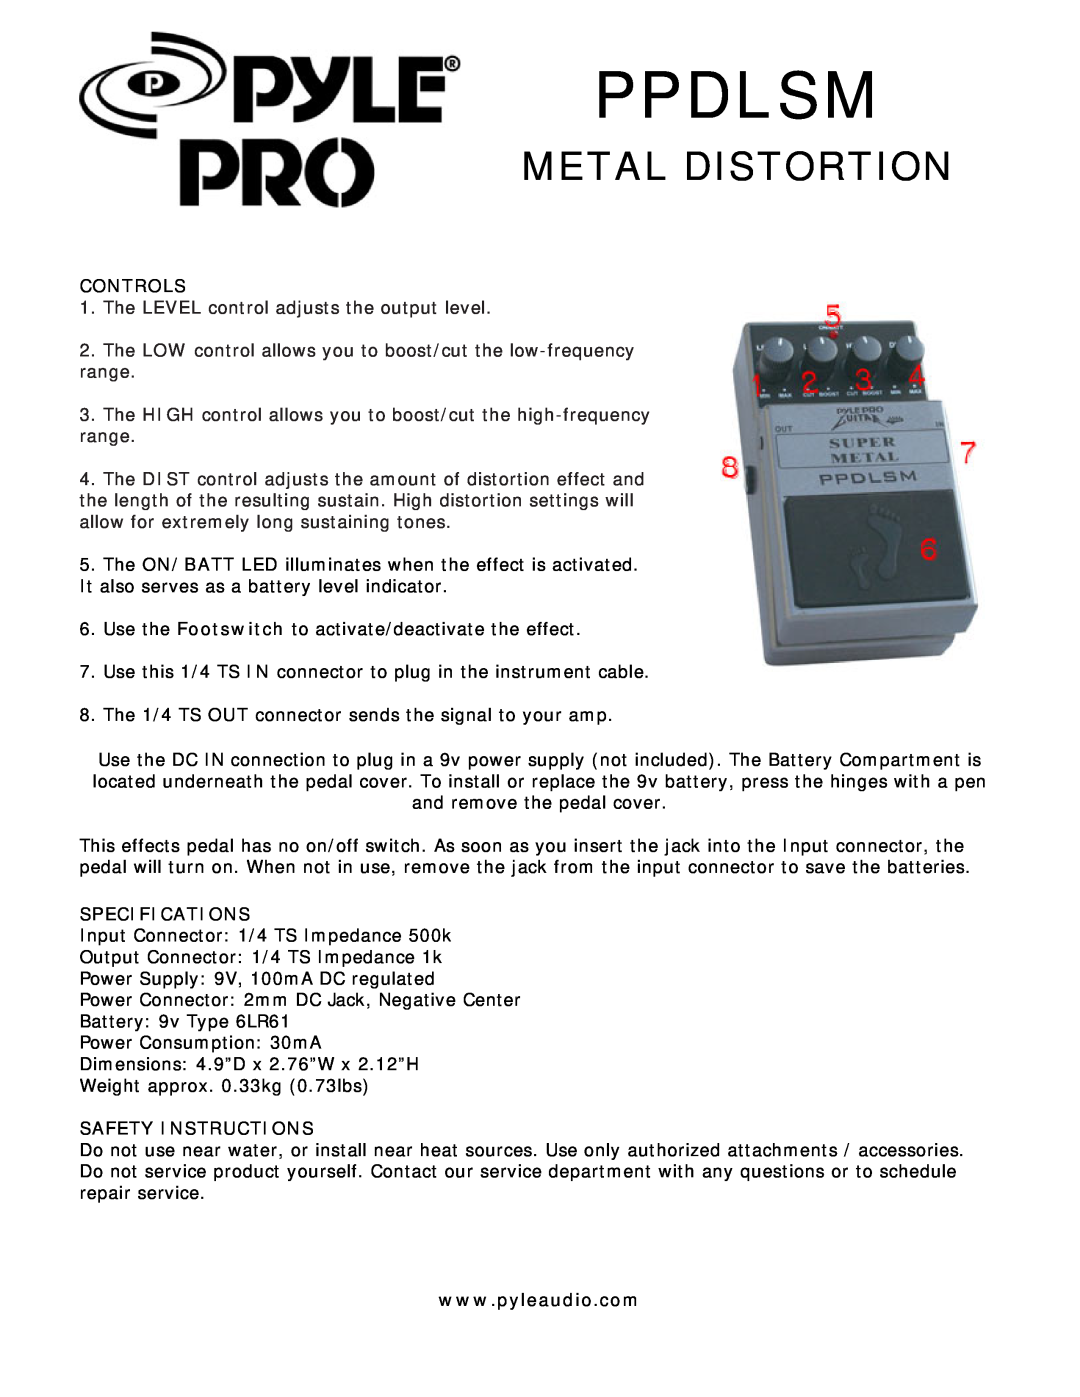 PYLE Audio PPDLSM dimensions Ppdlsm, Metal Distortion, Controls, The LEVEL control adjusts the output level 